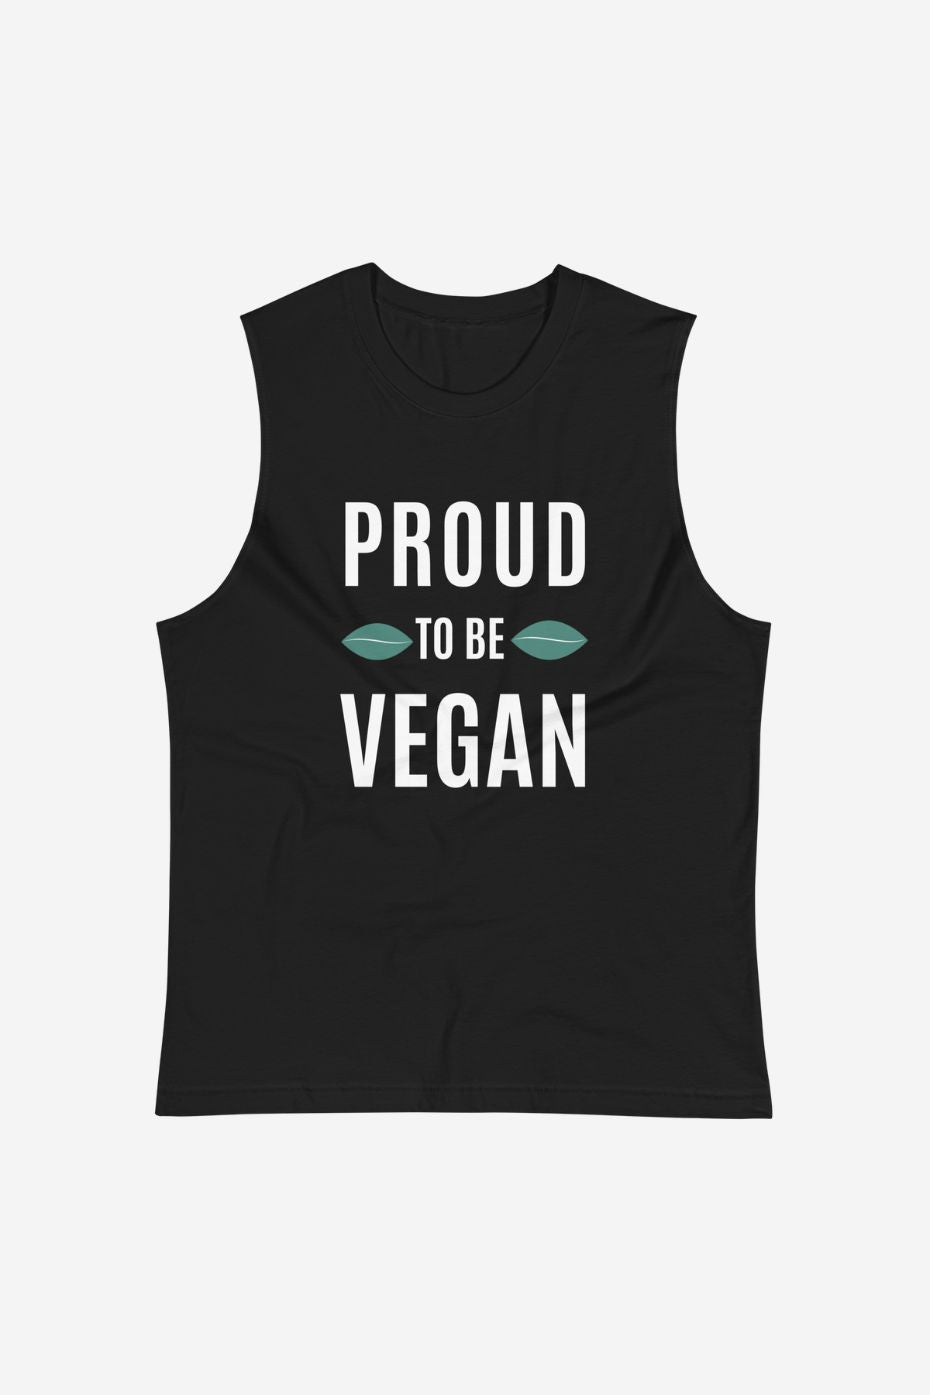 Proud To Be Vegan - Unisex Muscle Shirt